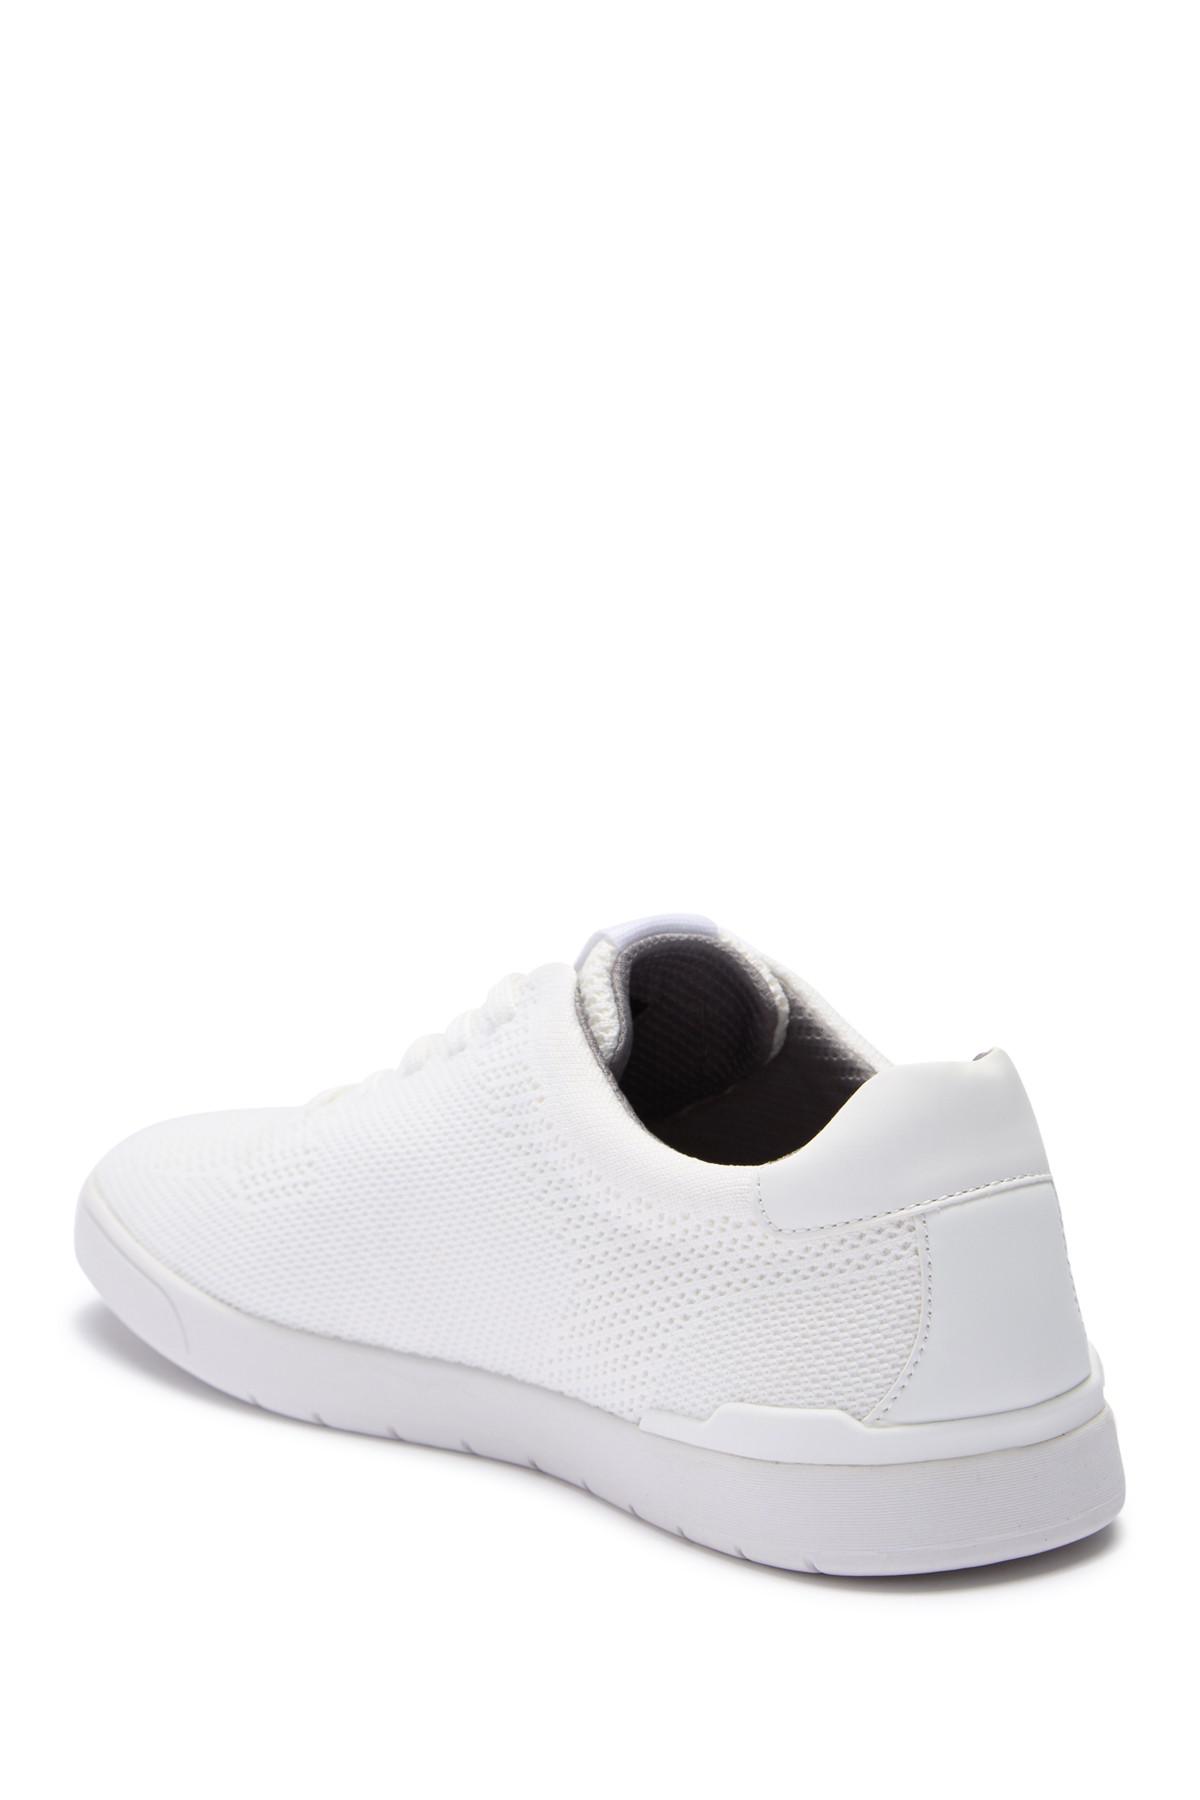 ALDO Heary Sneaker in White for Men - Lyst